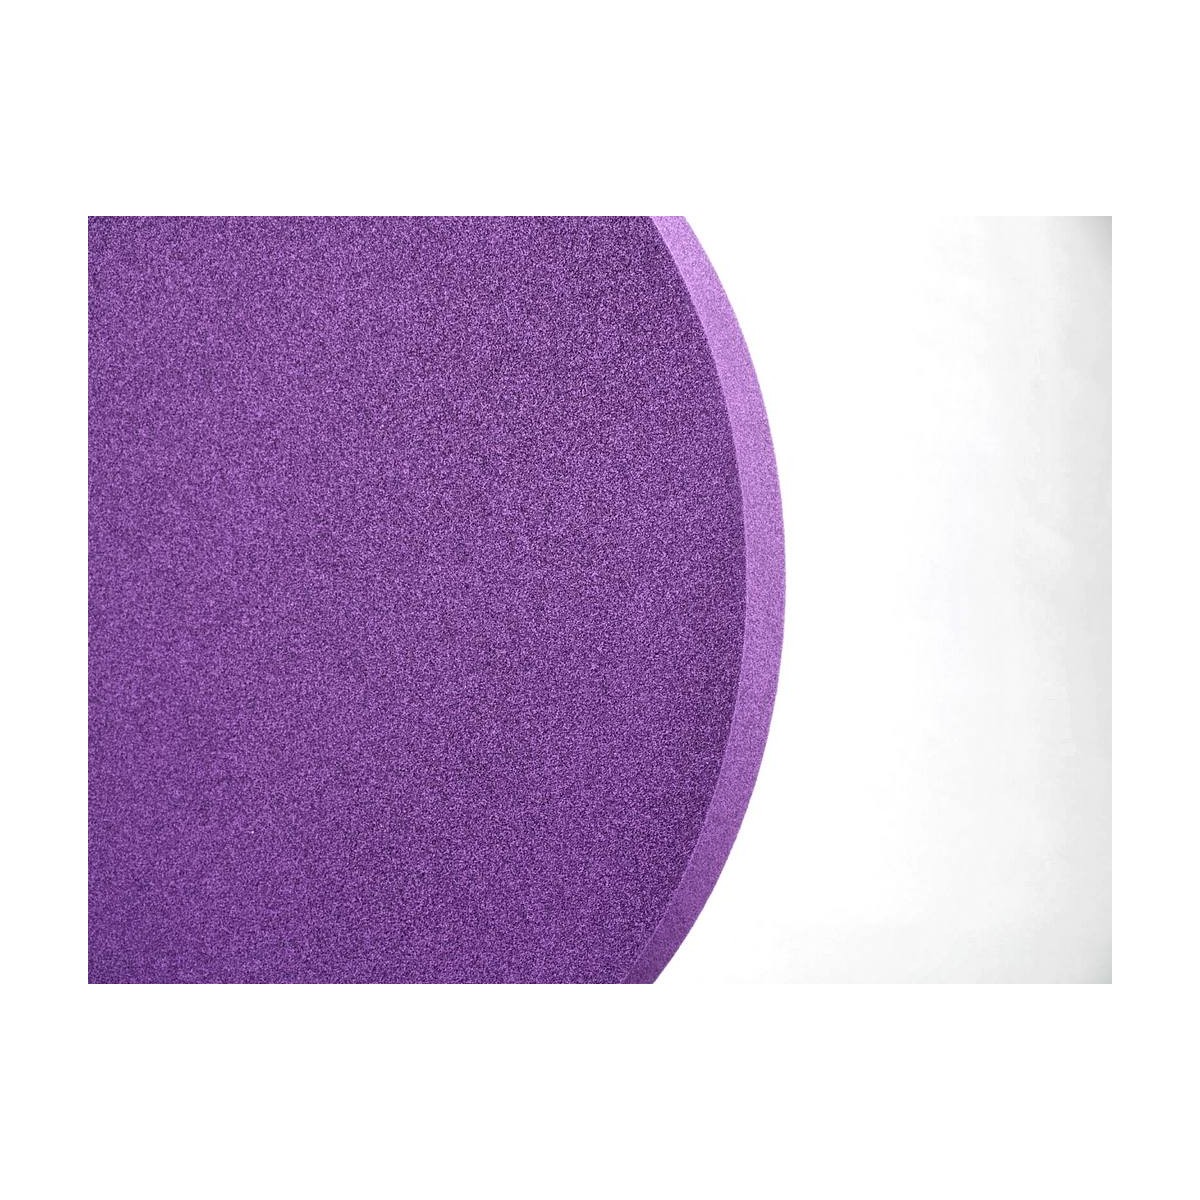 Circle pure purple